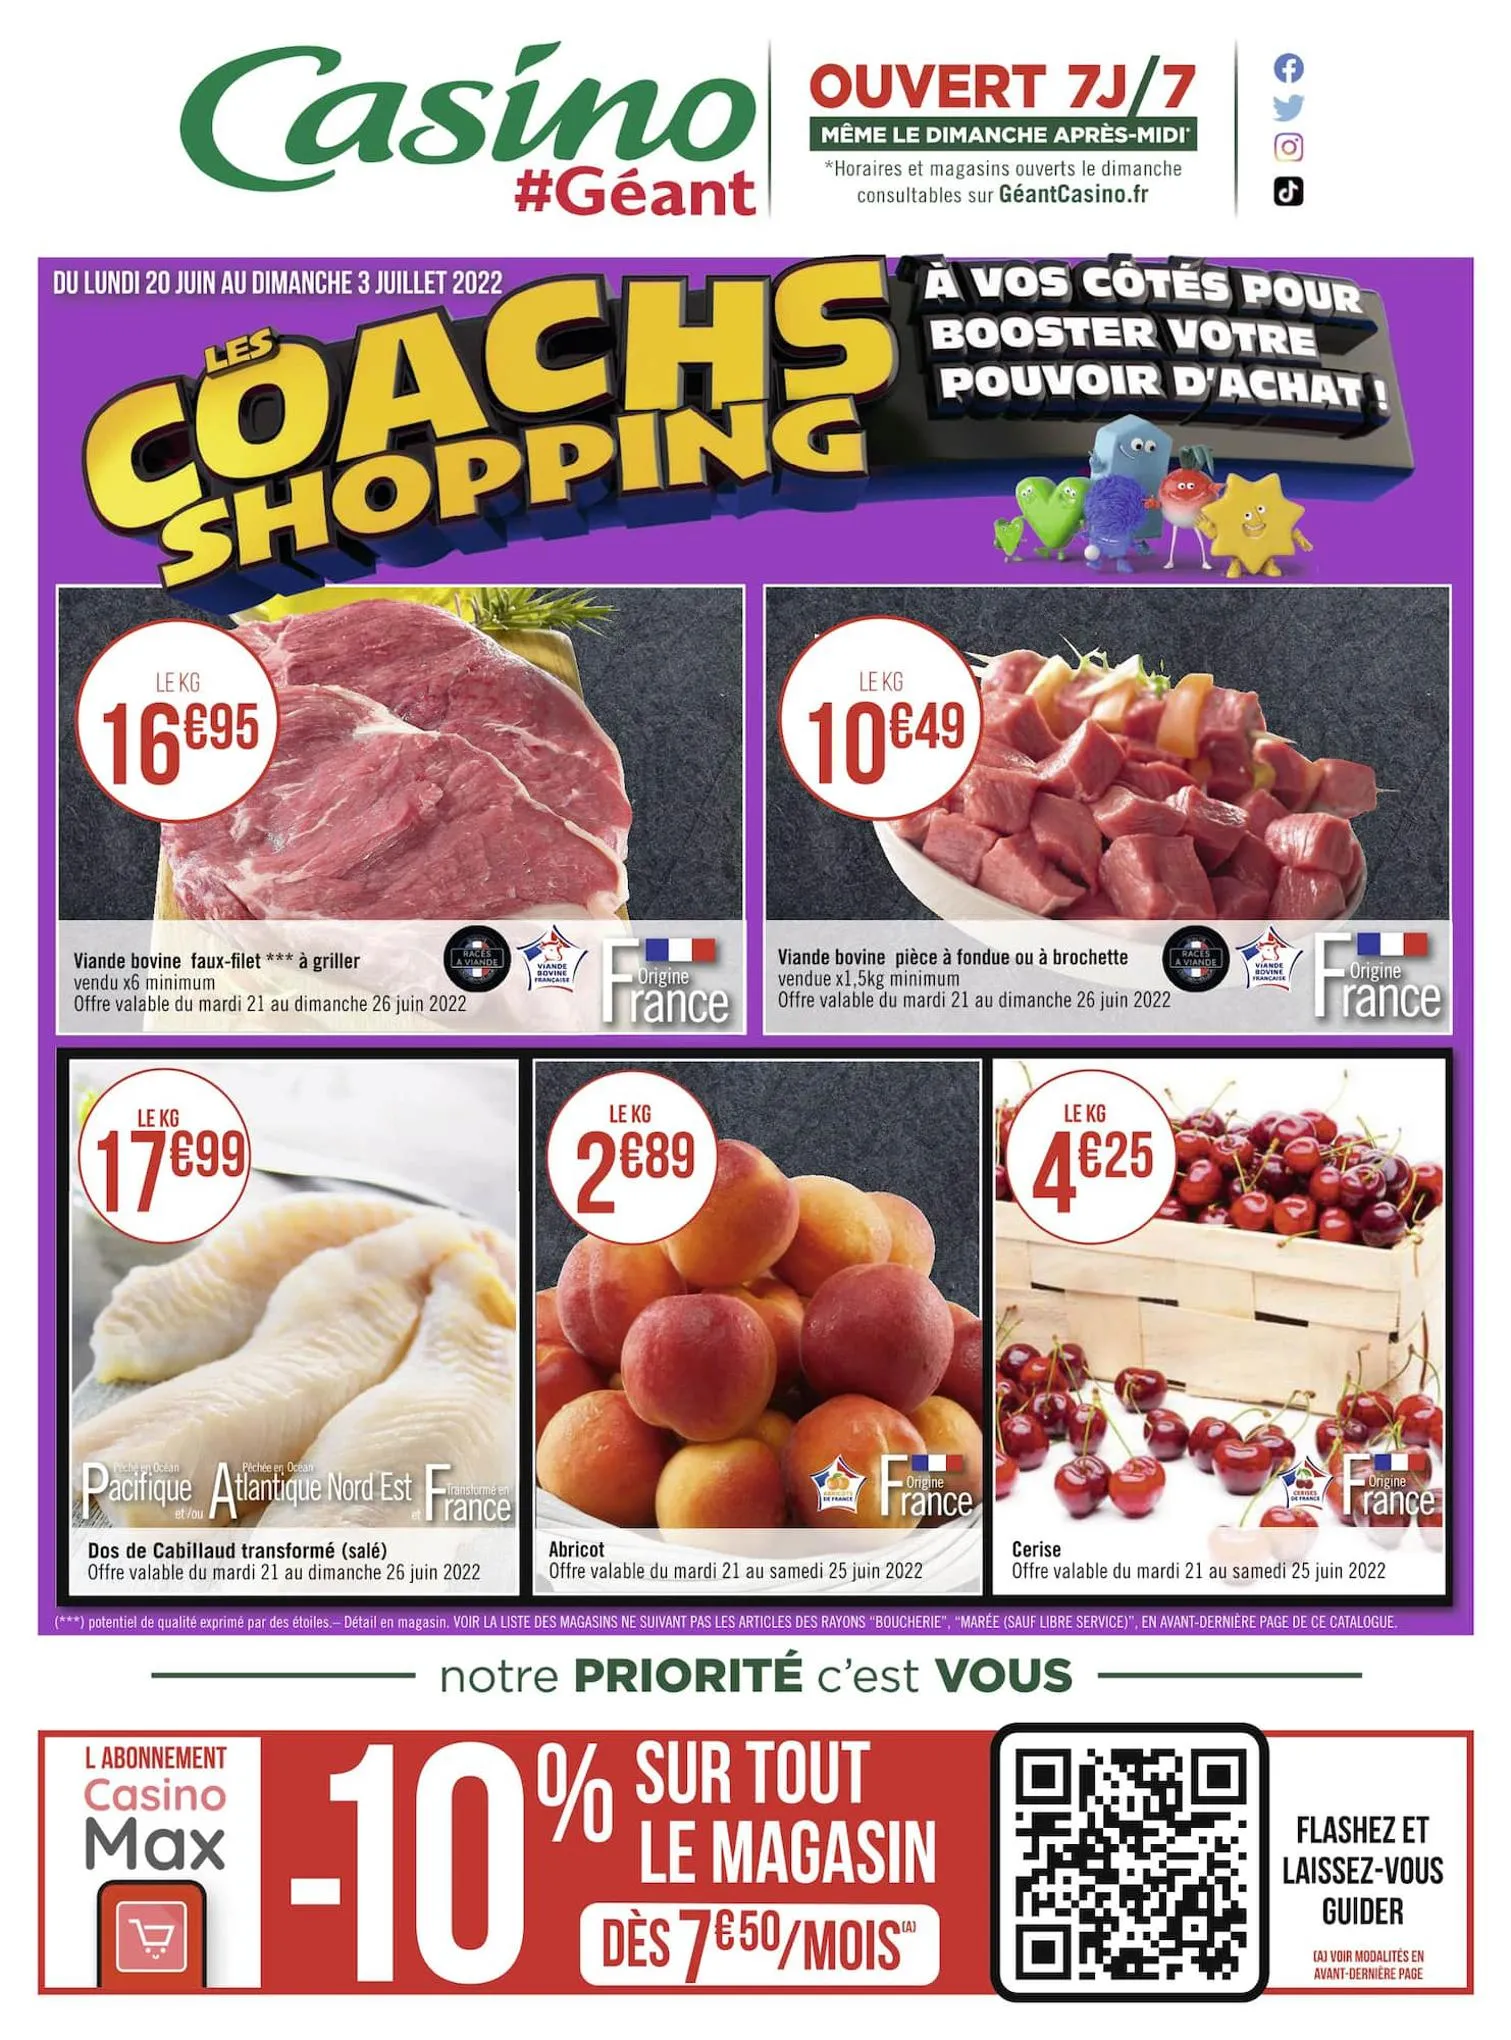 Catalogue Les coachs shopping, page 00046